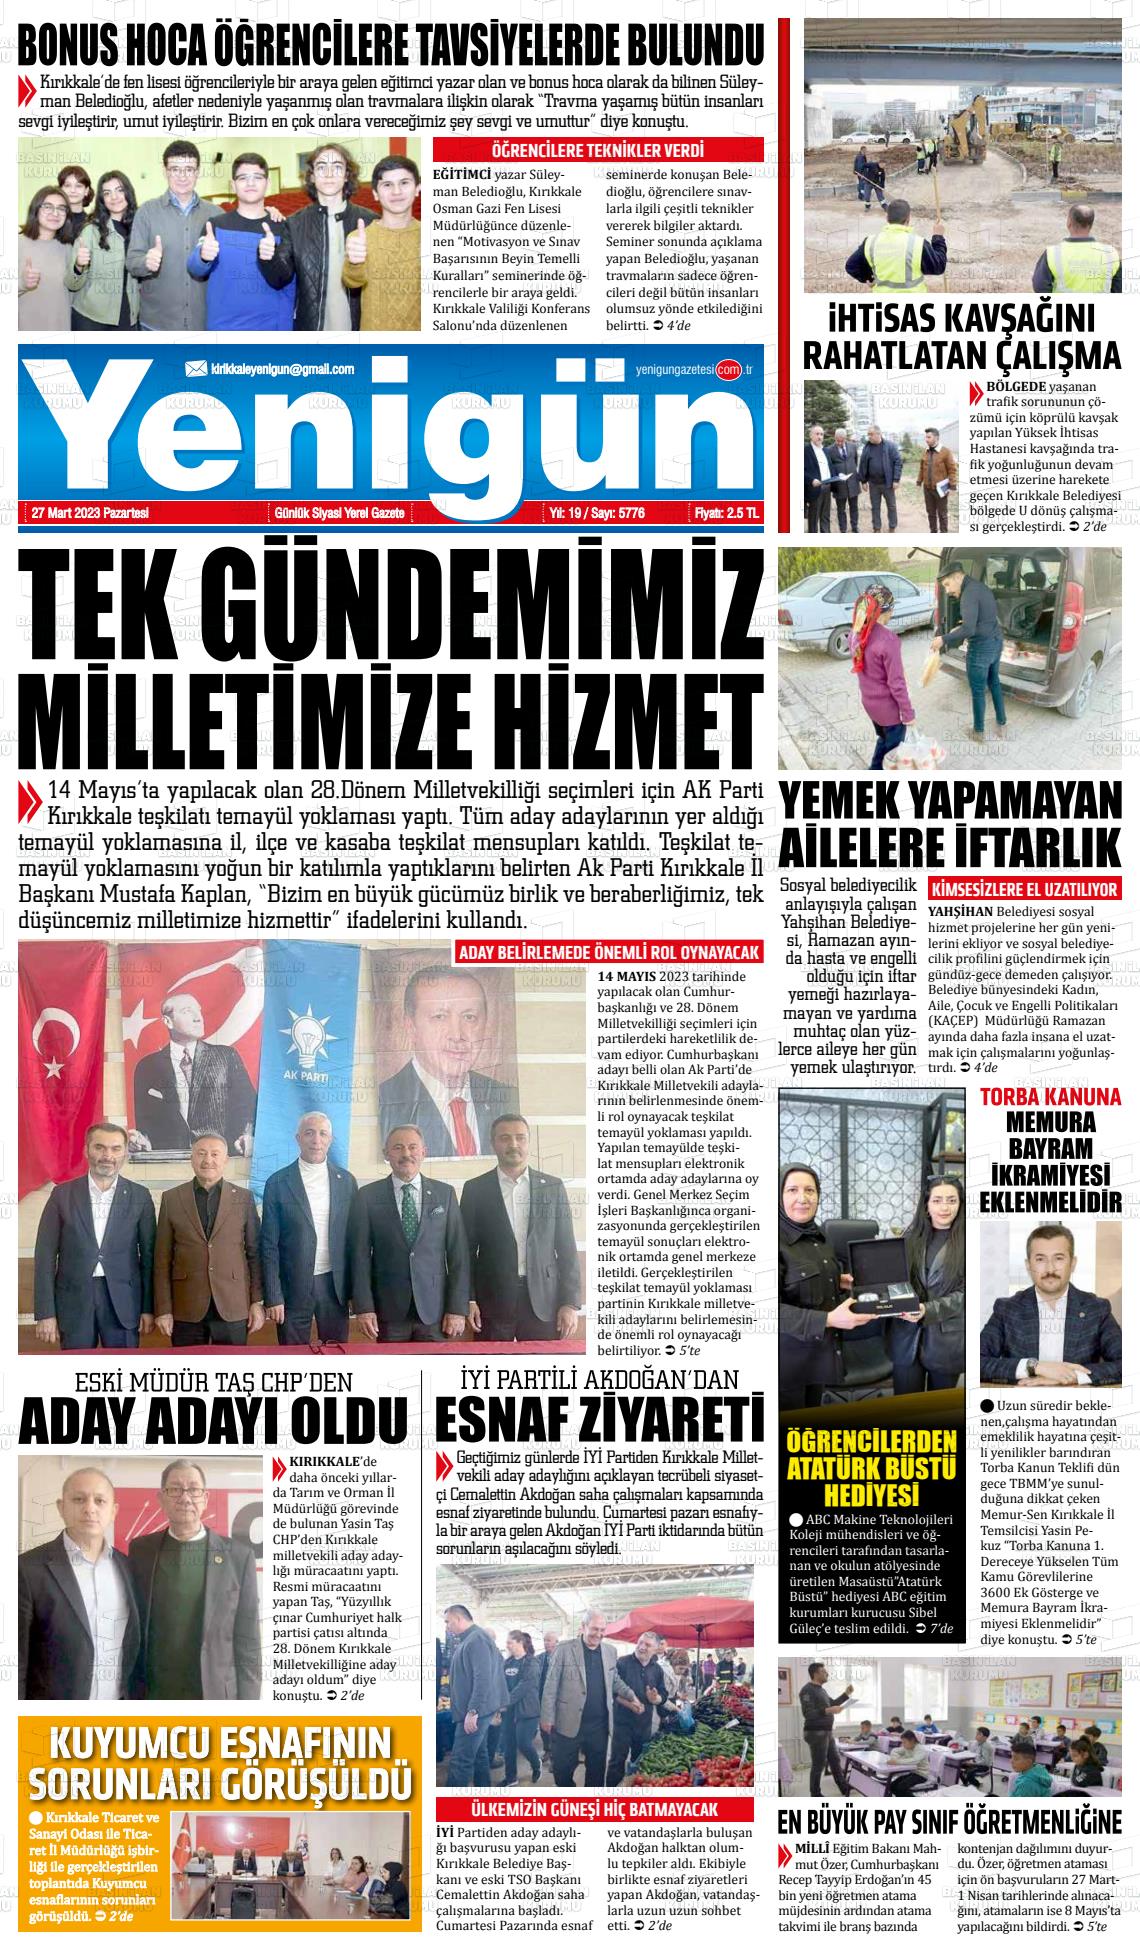 27 Mart 2023 Yenigün Gazete Manşeti